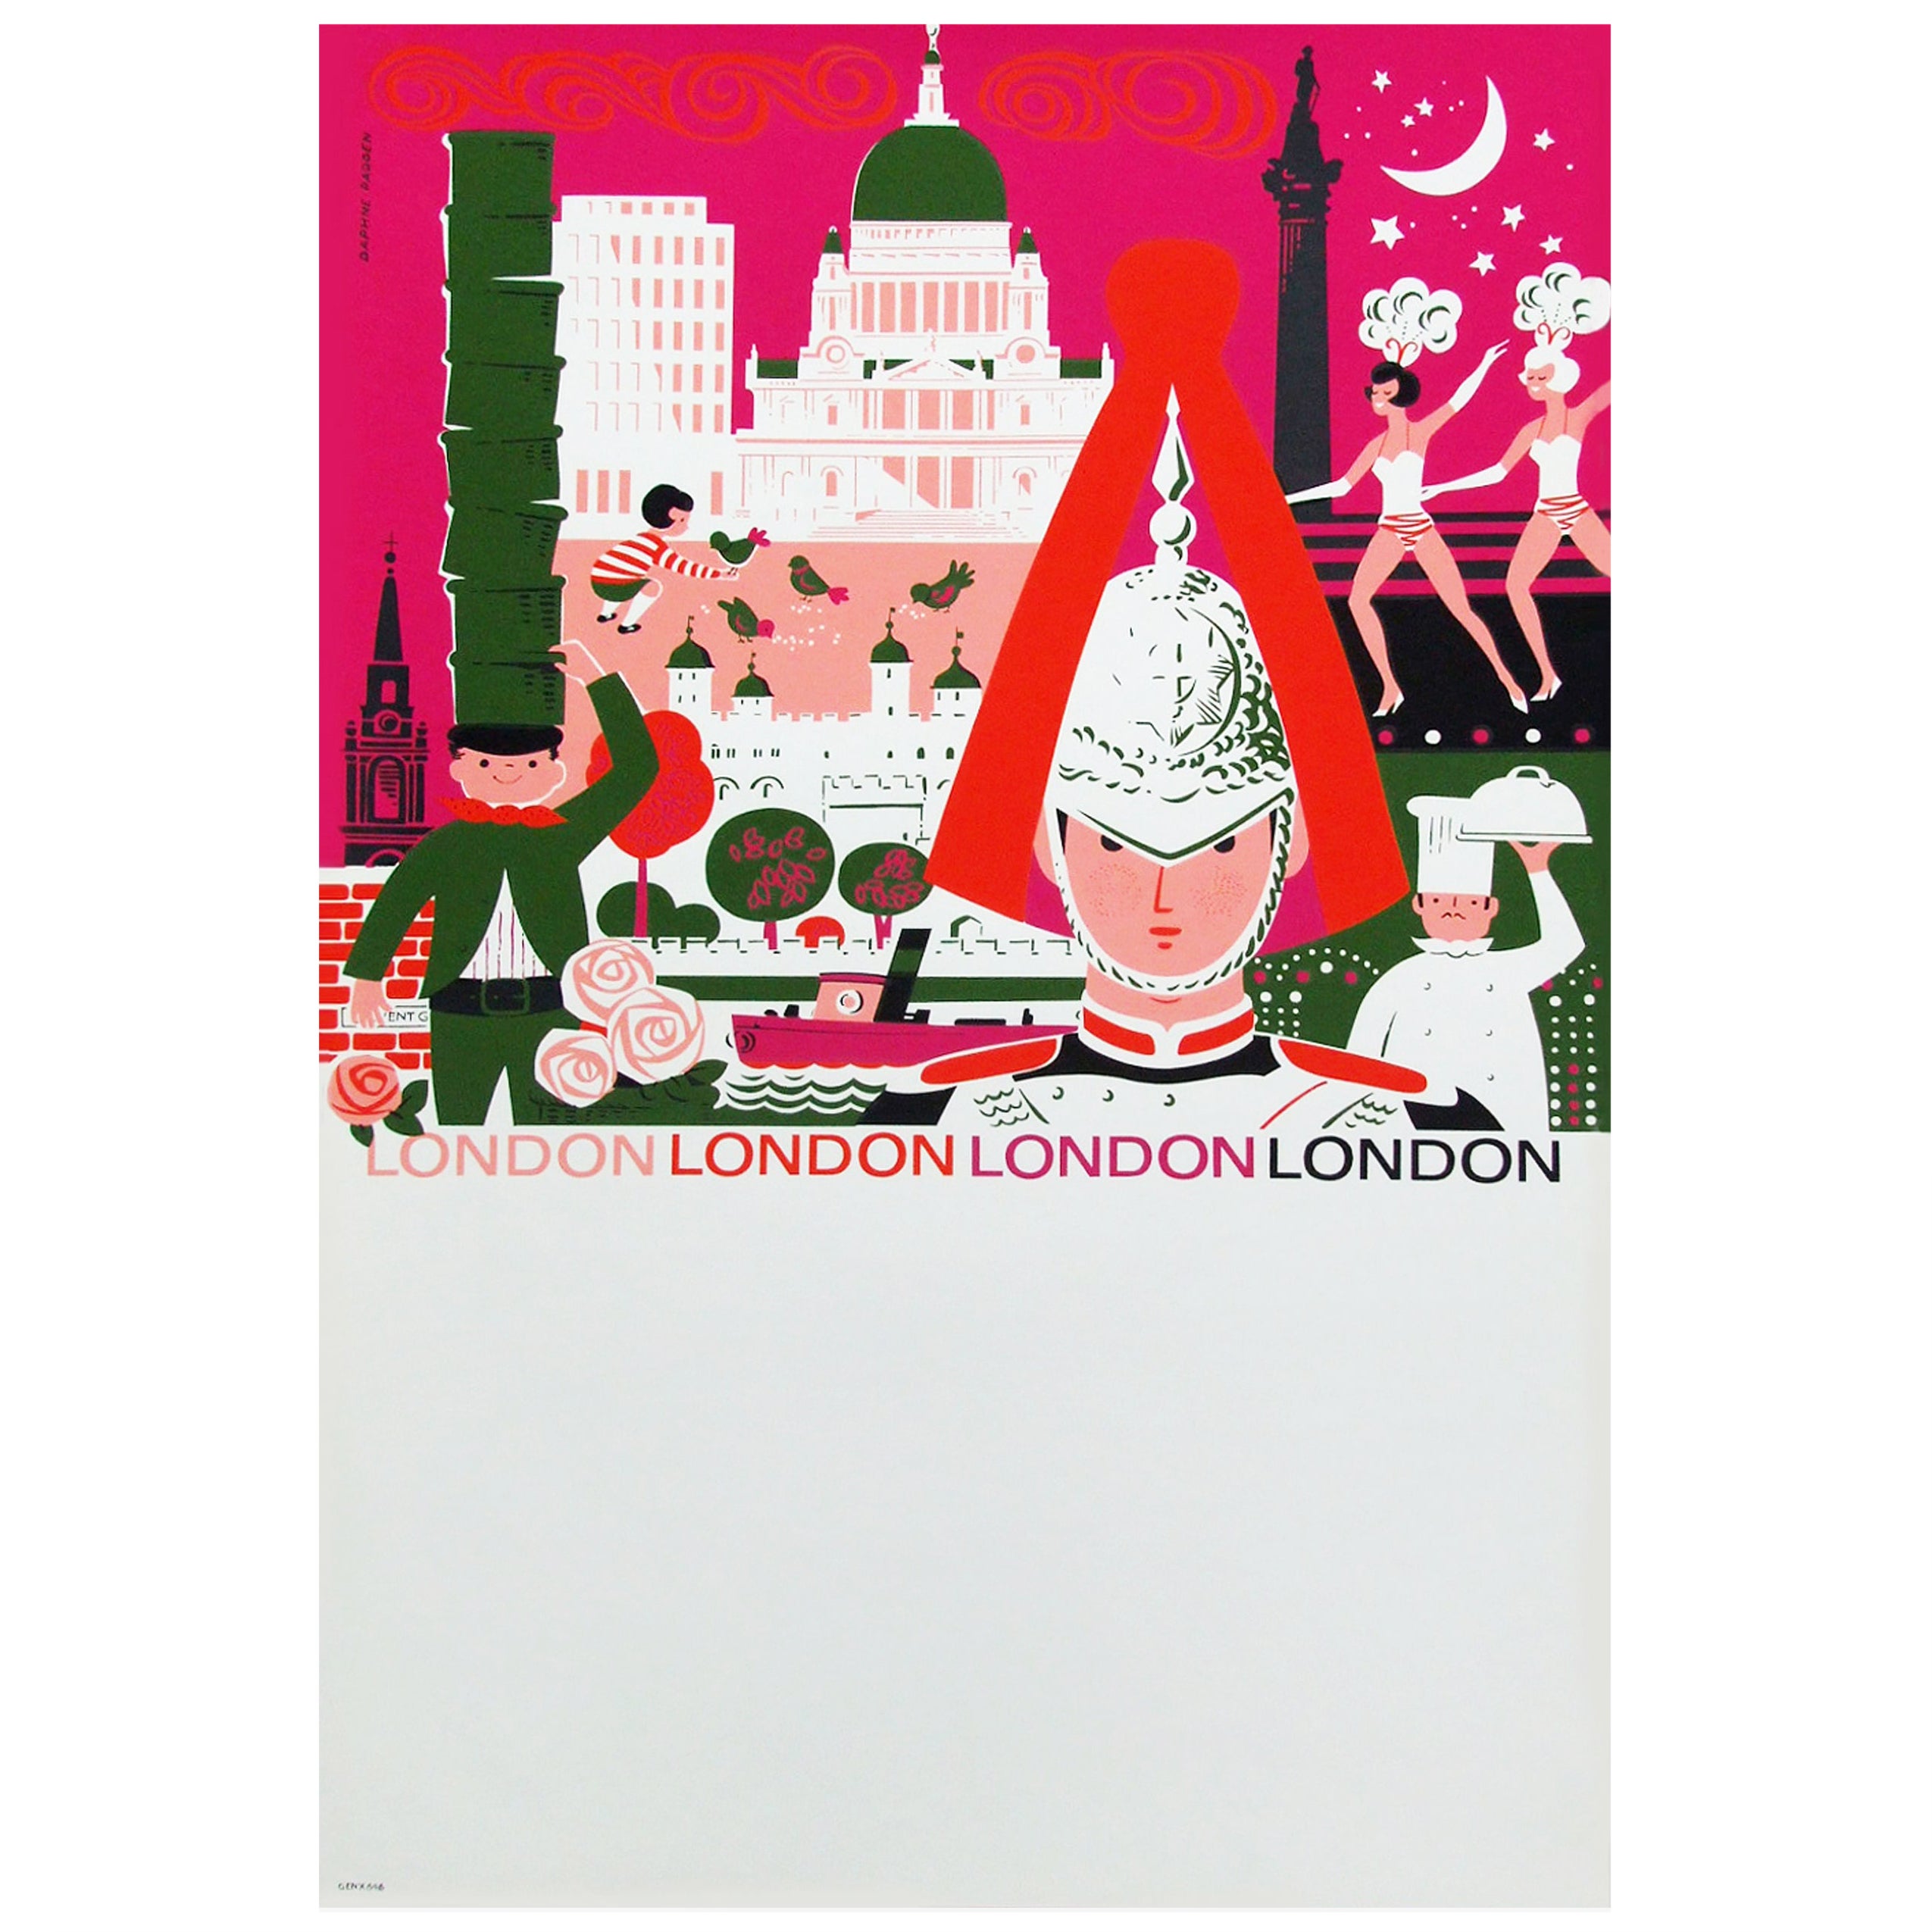 1960s London British Travel Poster by Daphne Padden, Pop Art Illustration Design